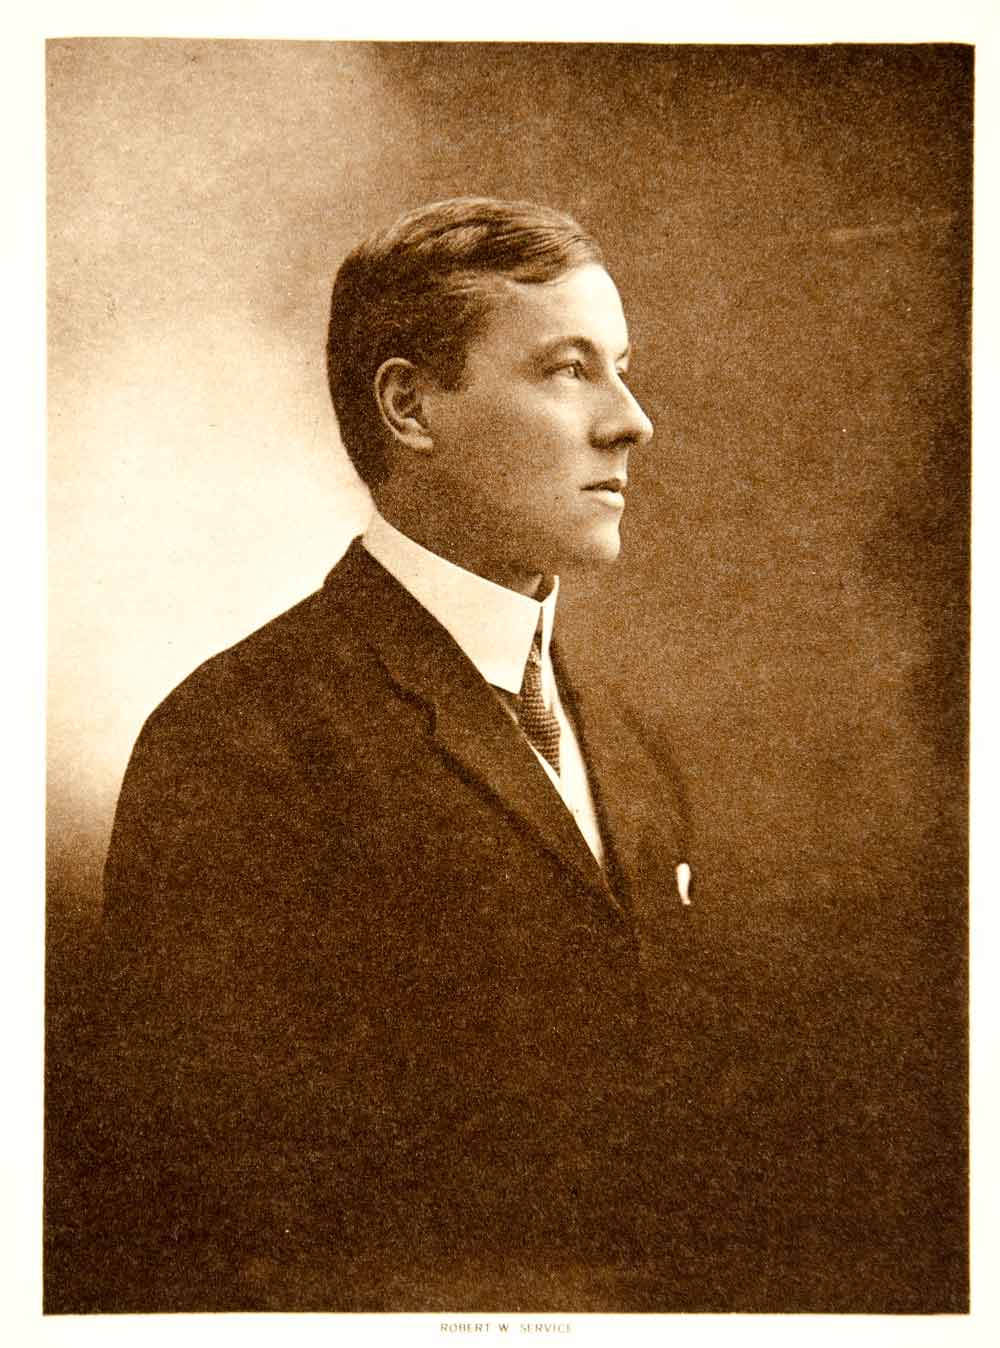 1919 Photogravure Robert W. Service Portrait Poet Writer Bard of the Yukon YTMM2